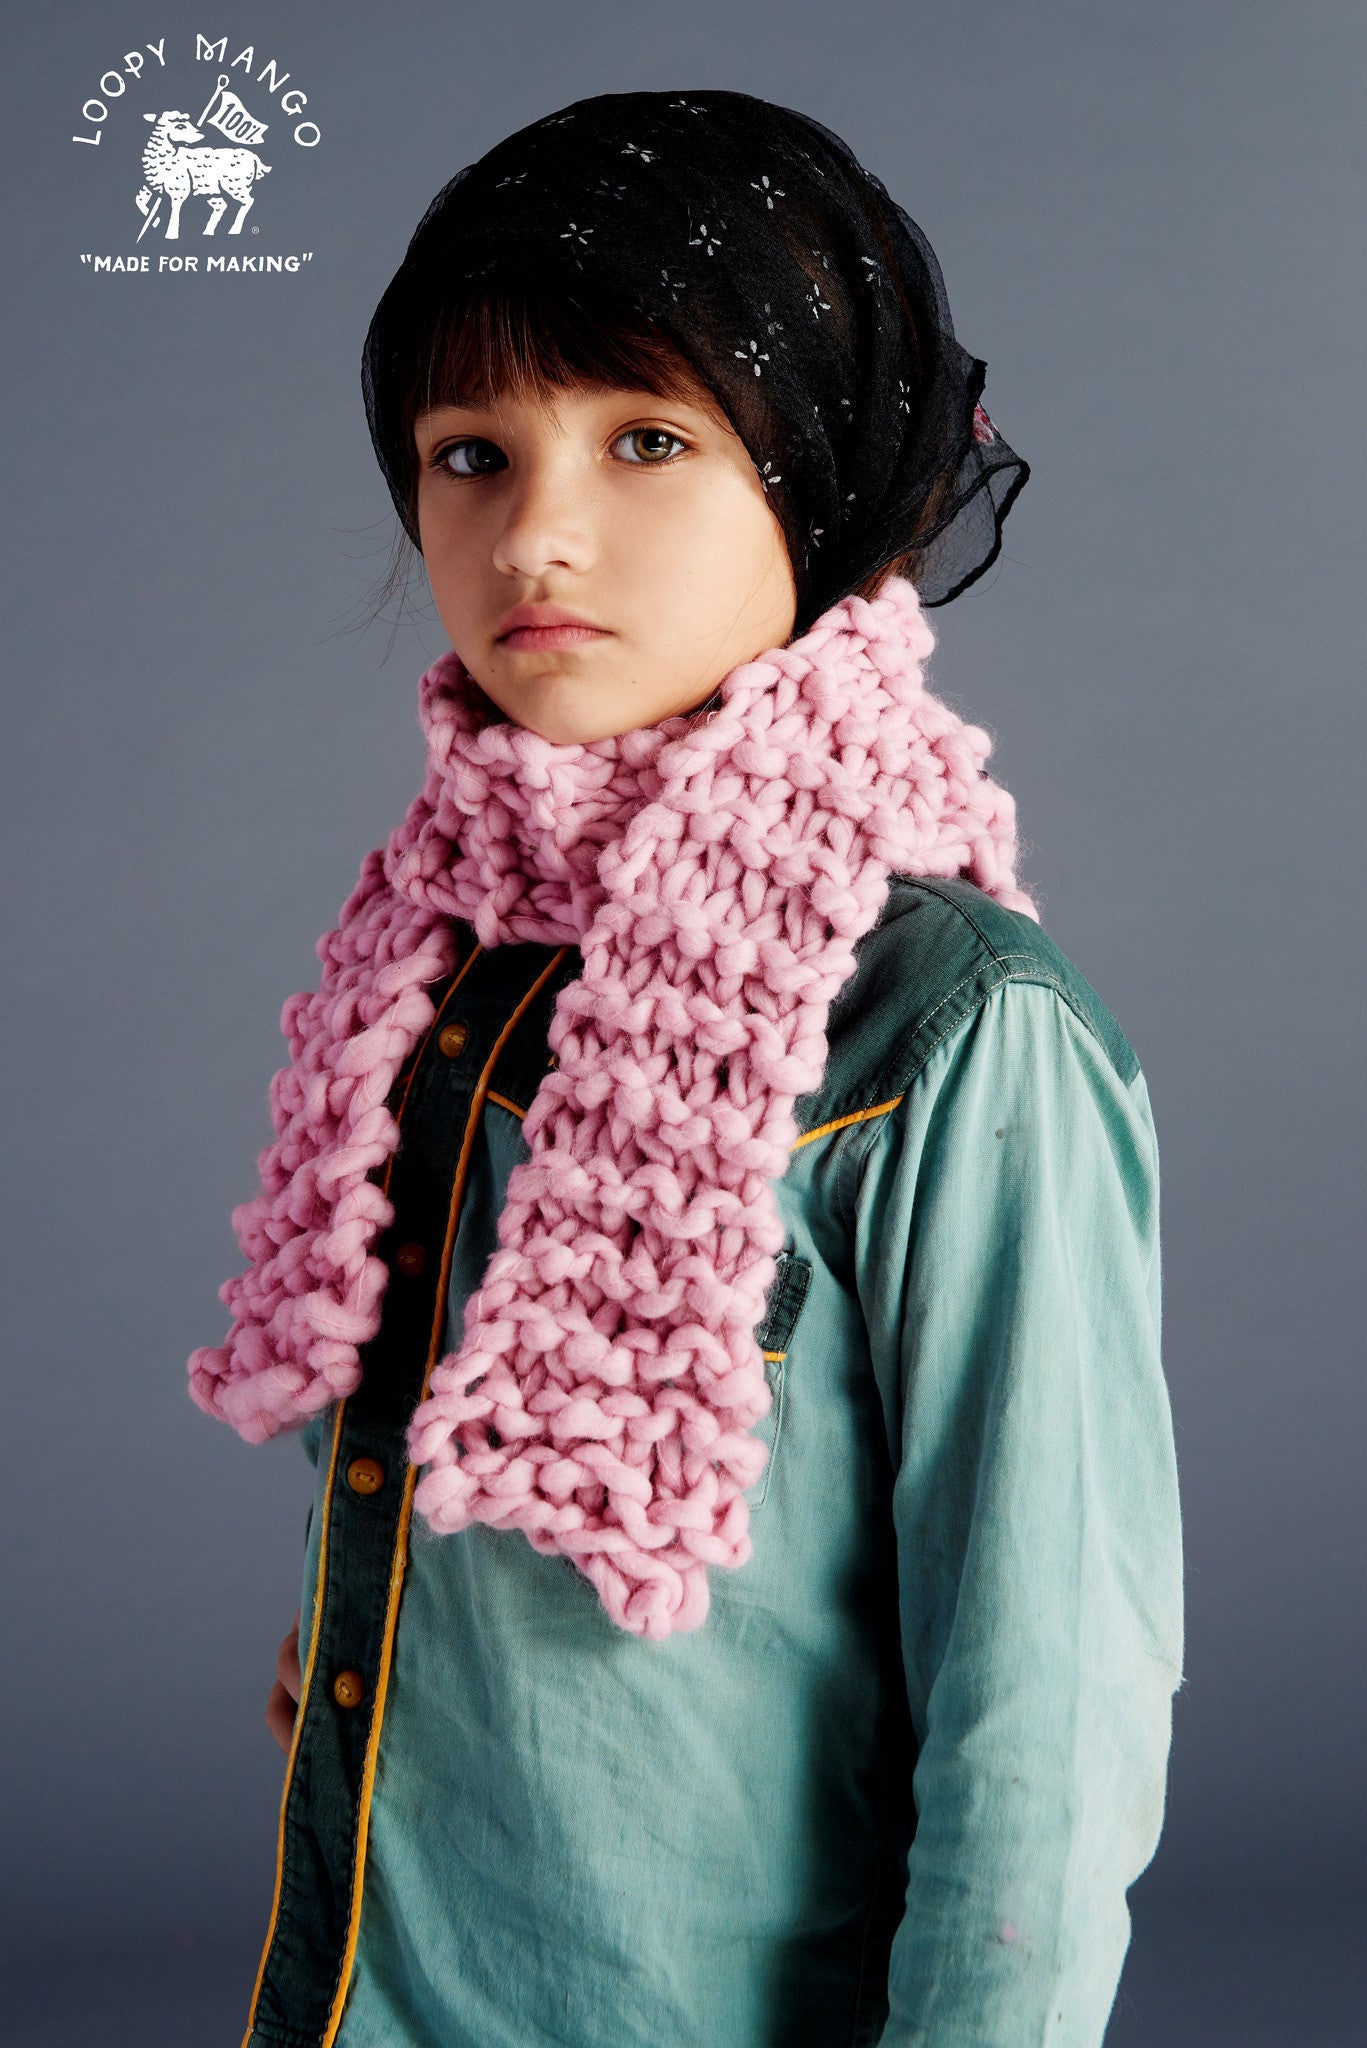 150 G Fuzzy Yarn Yarn for Crocheting Clearance Scarf Sweater Baby